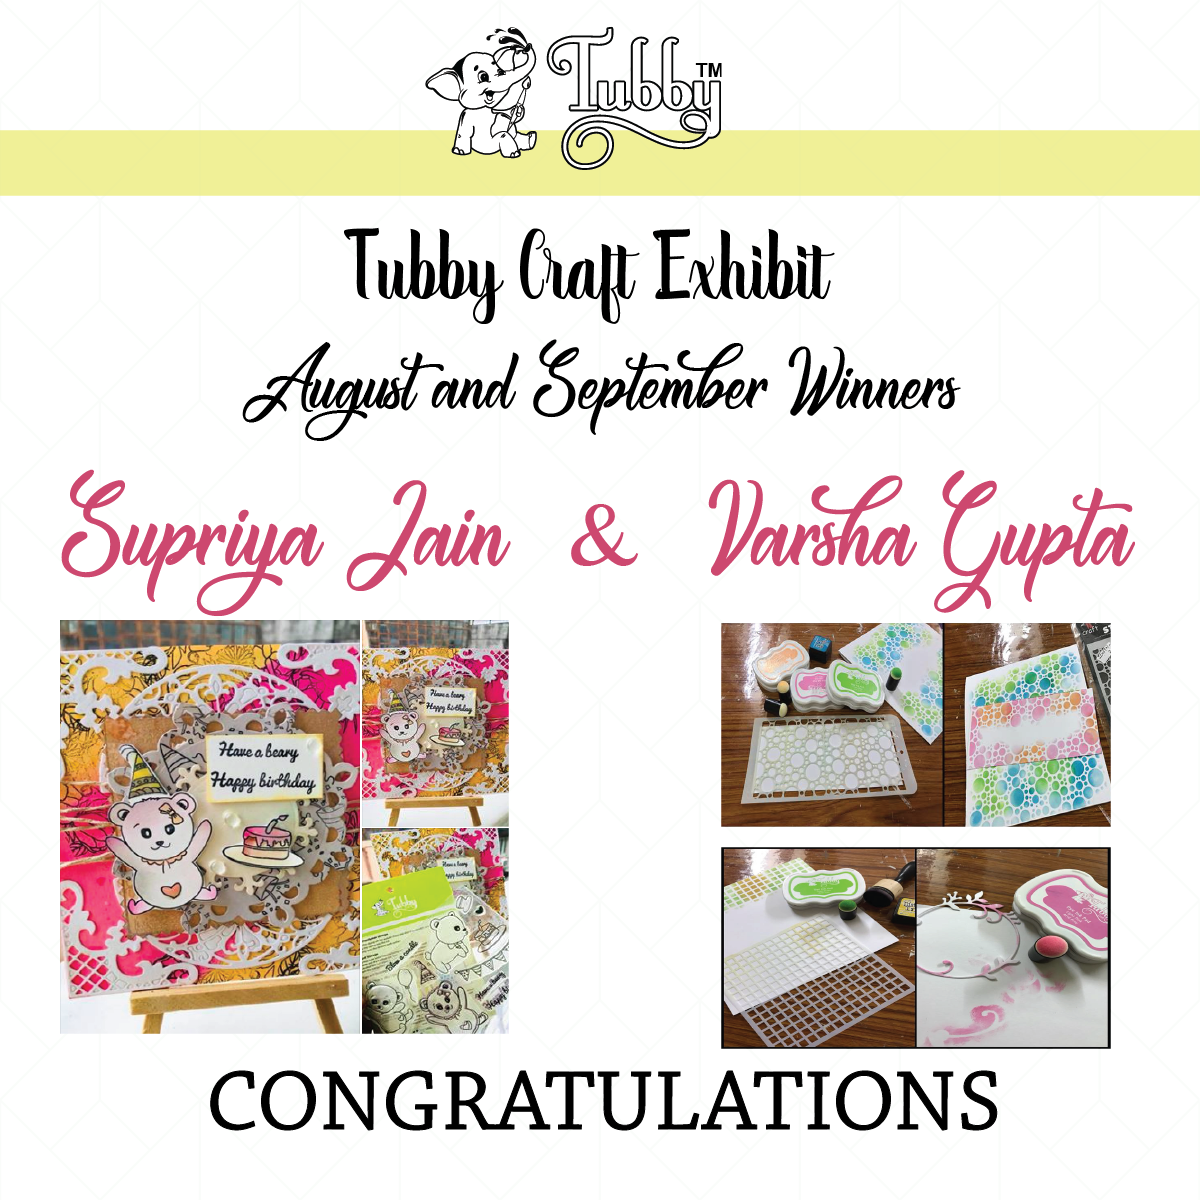 Tubby craft exhibition winner